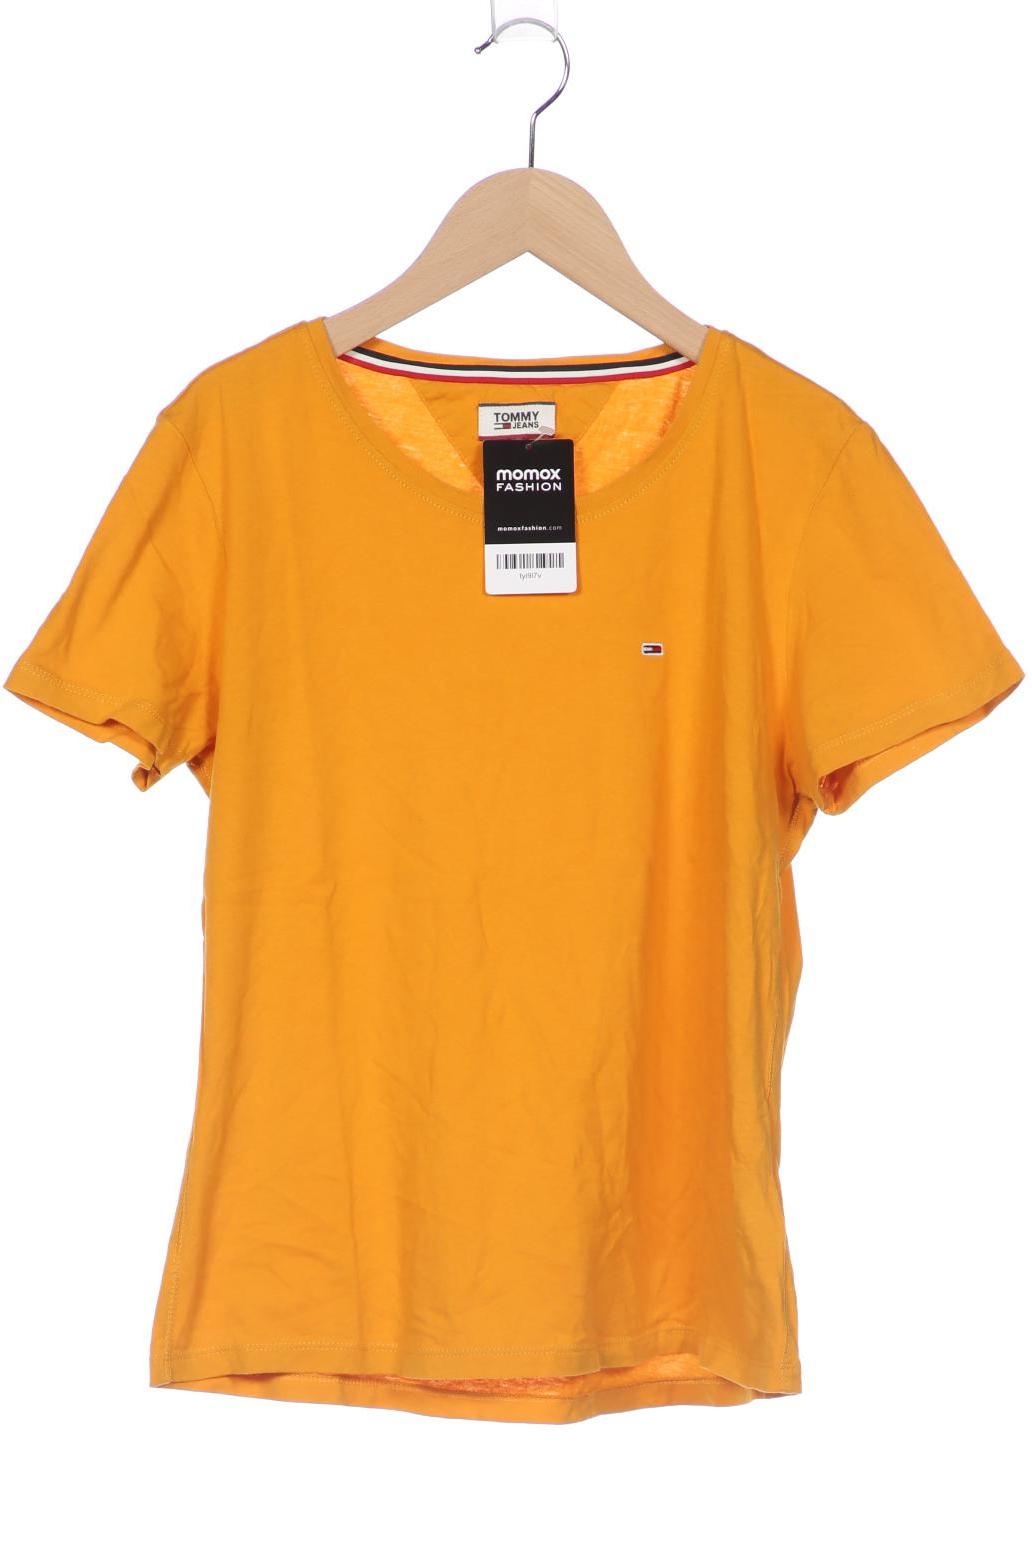 Tommy Jeans Damen T-Shirt, orange von Tommy Jeans